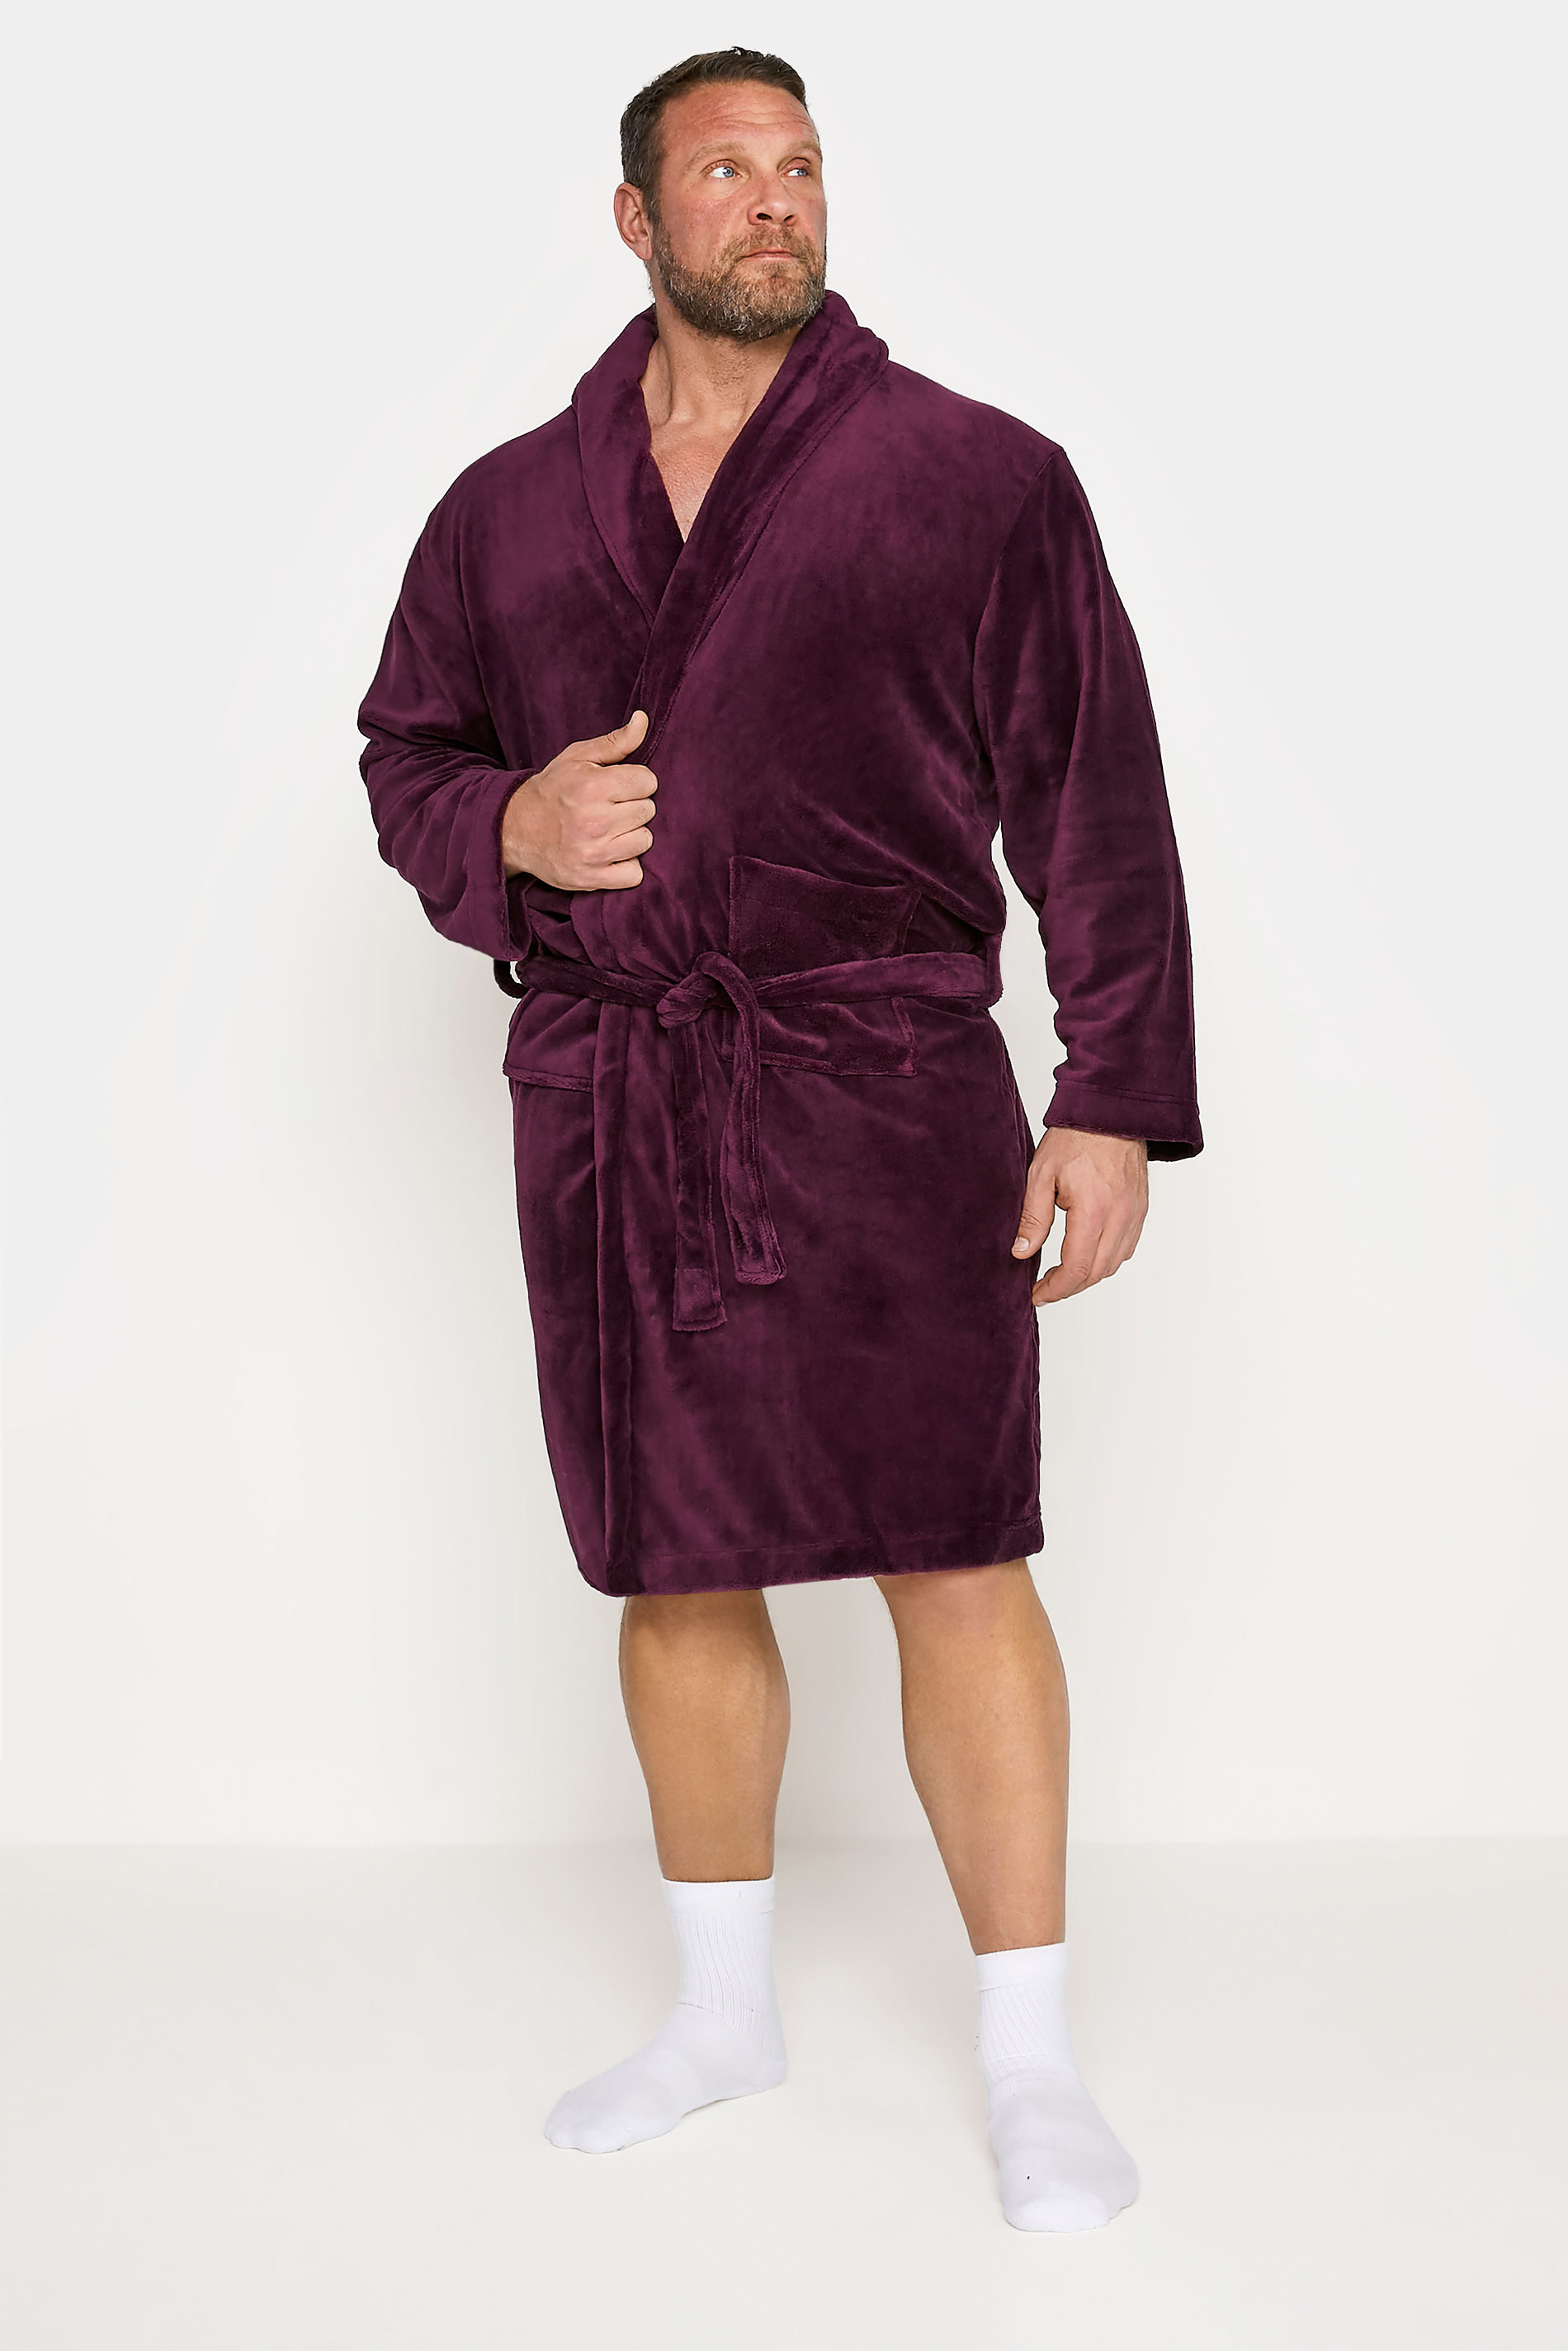 BadRhino ESPIONAGE Purple Dressing Gown | Bad Rhino 1